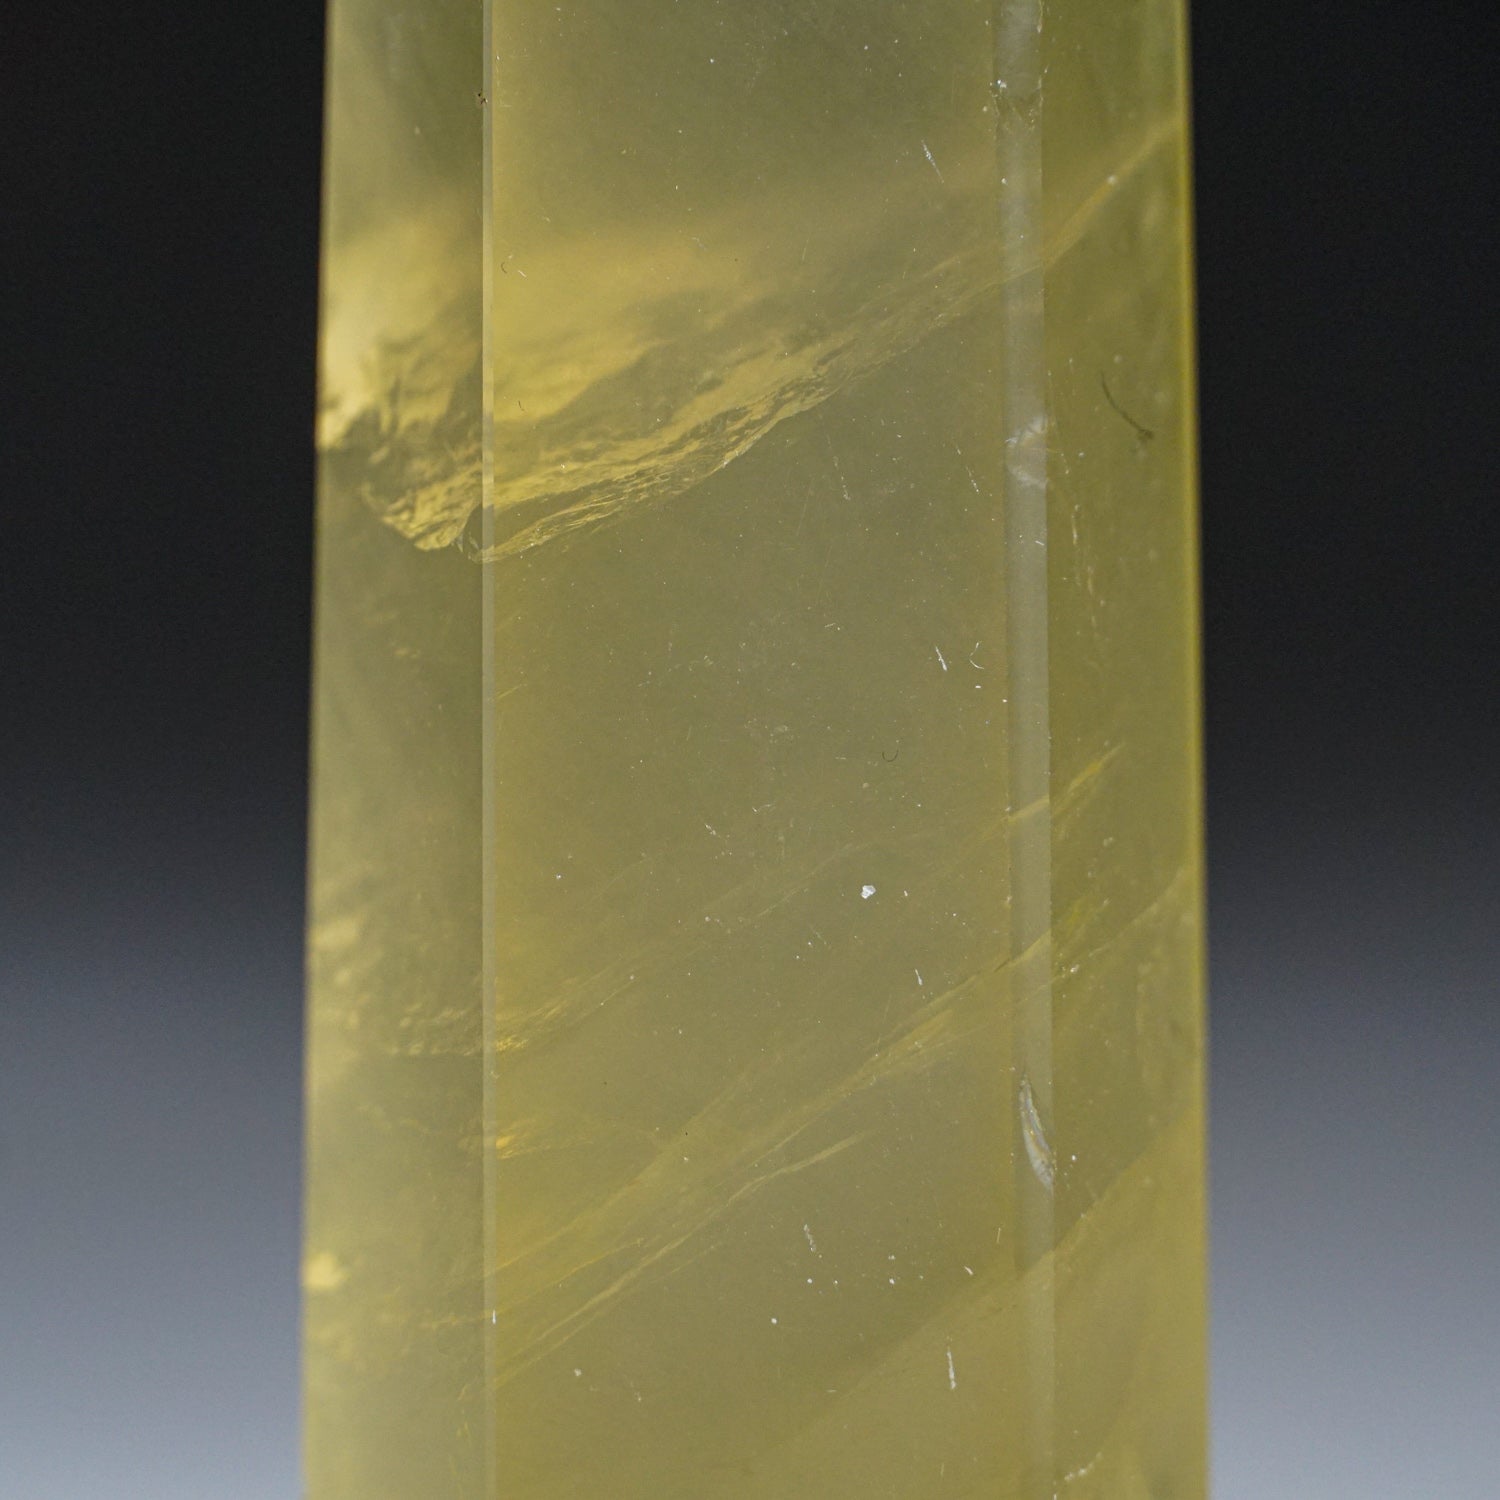 Polished Lemon Quartz Crystal Point from Brazil (180.6 grams)